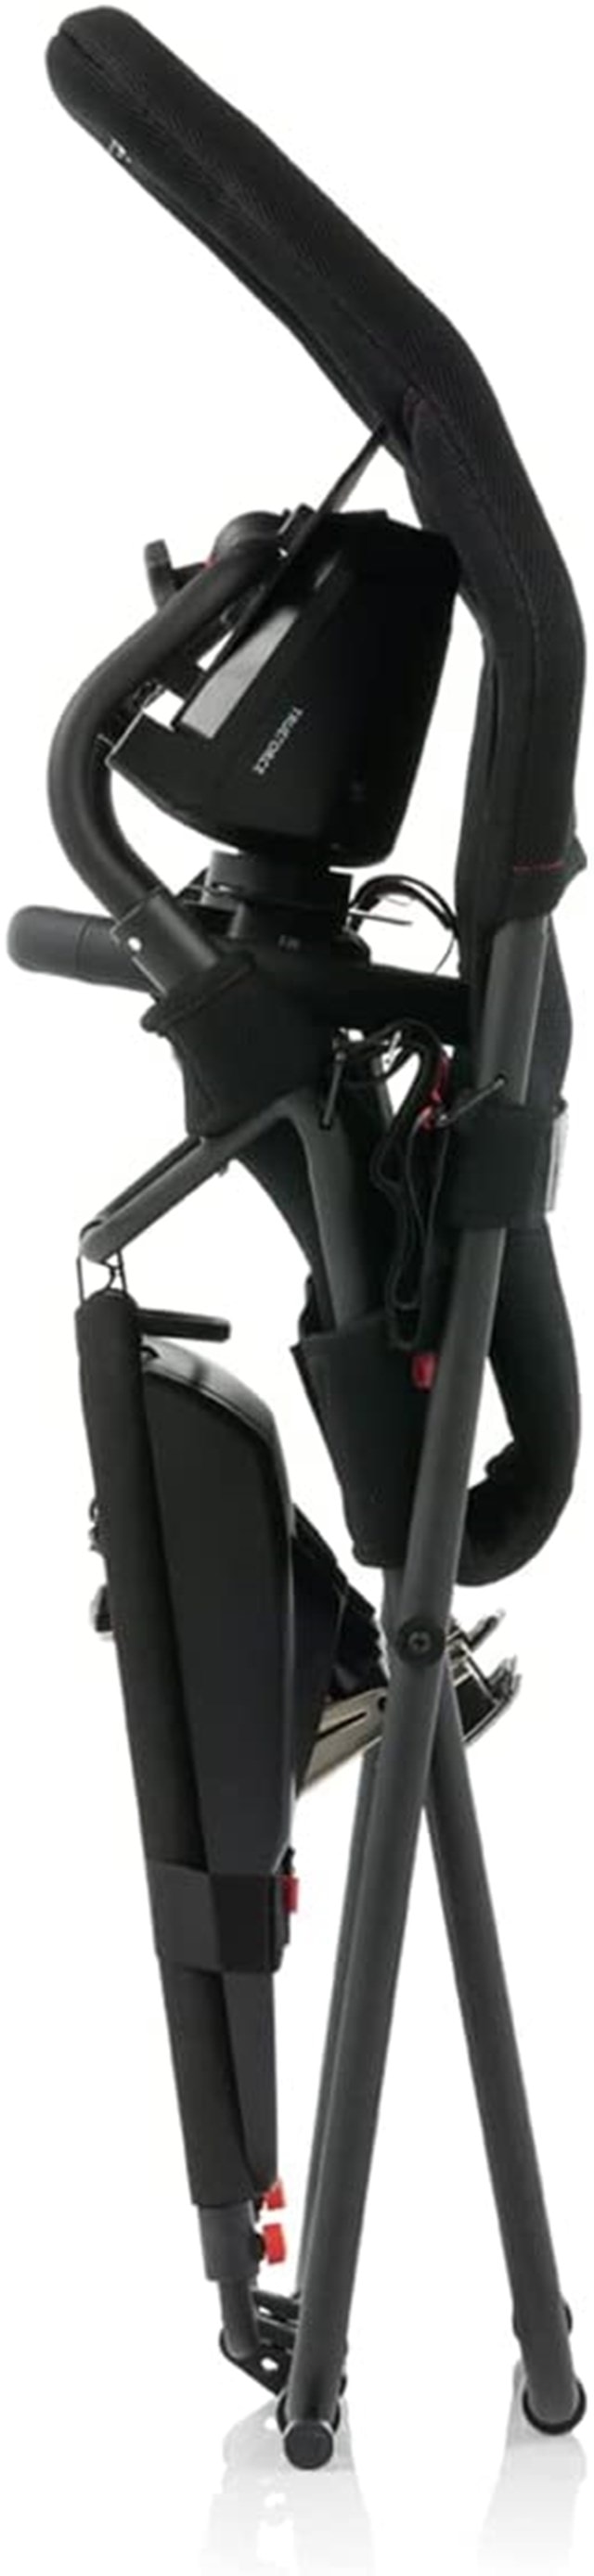 Playseat® Challenge Racing Gaming Chair - UK Version - 6